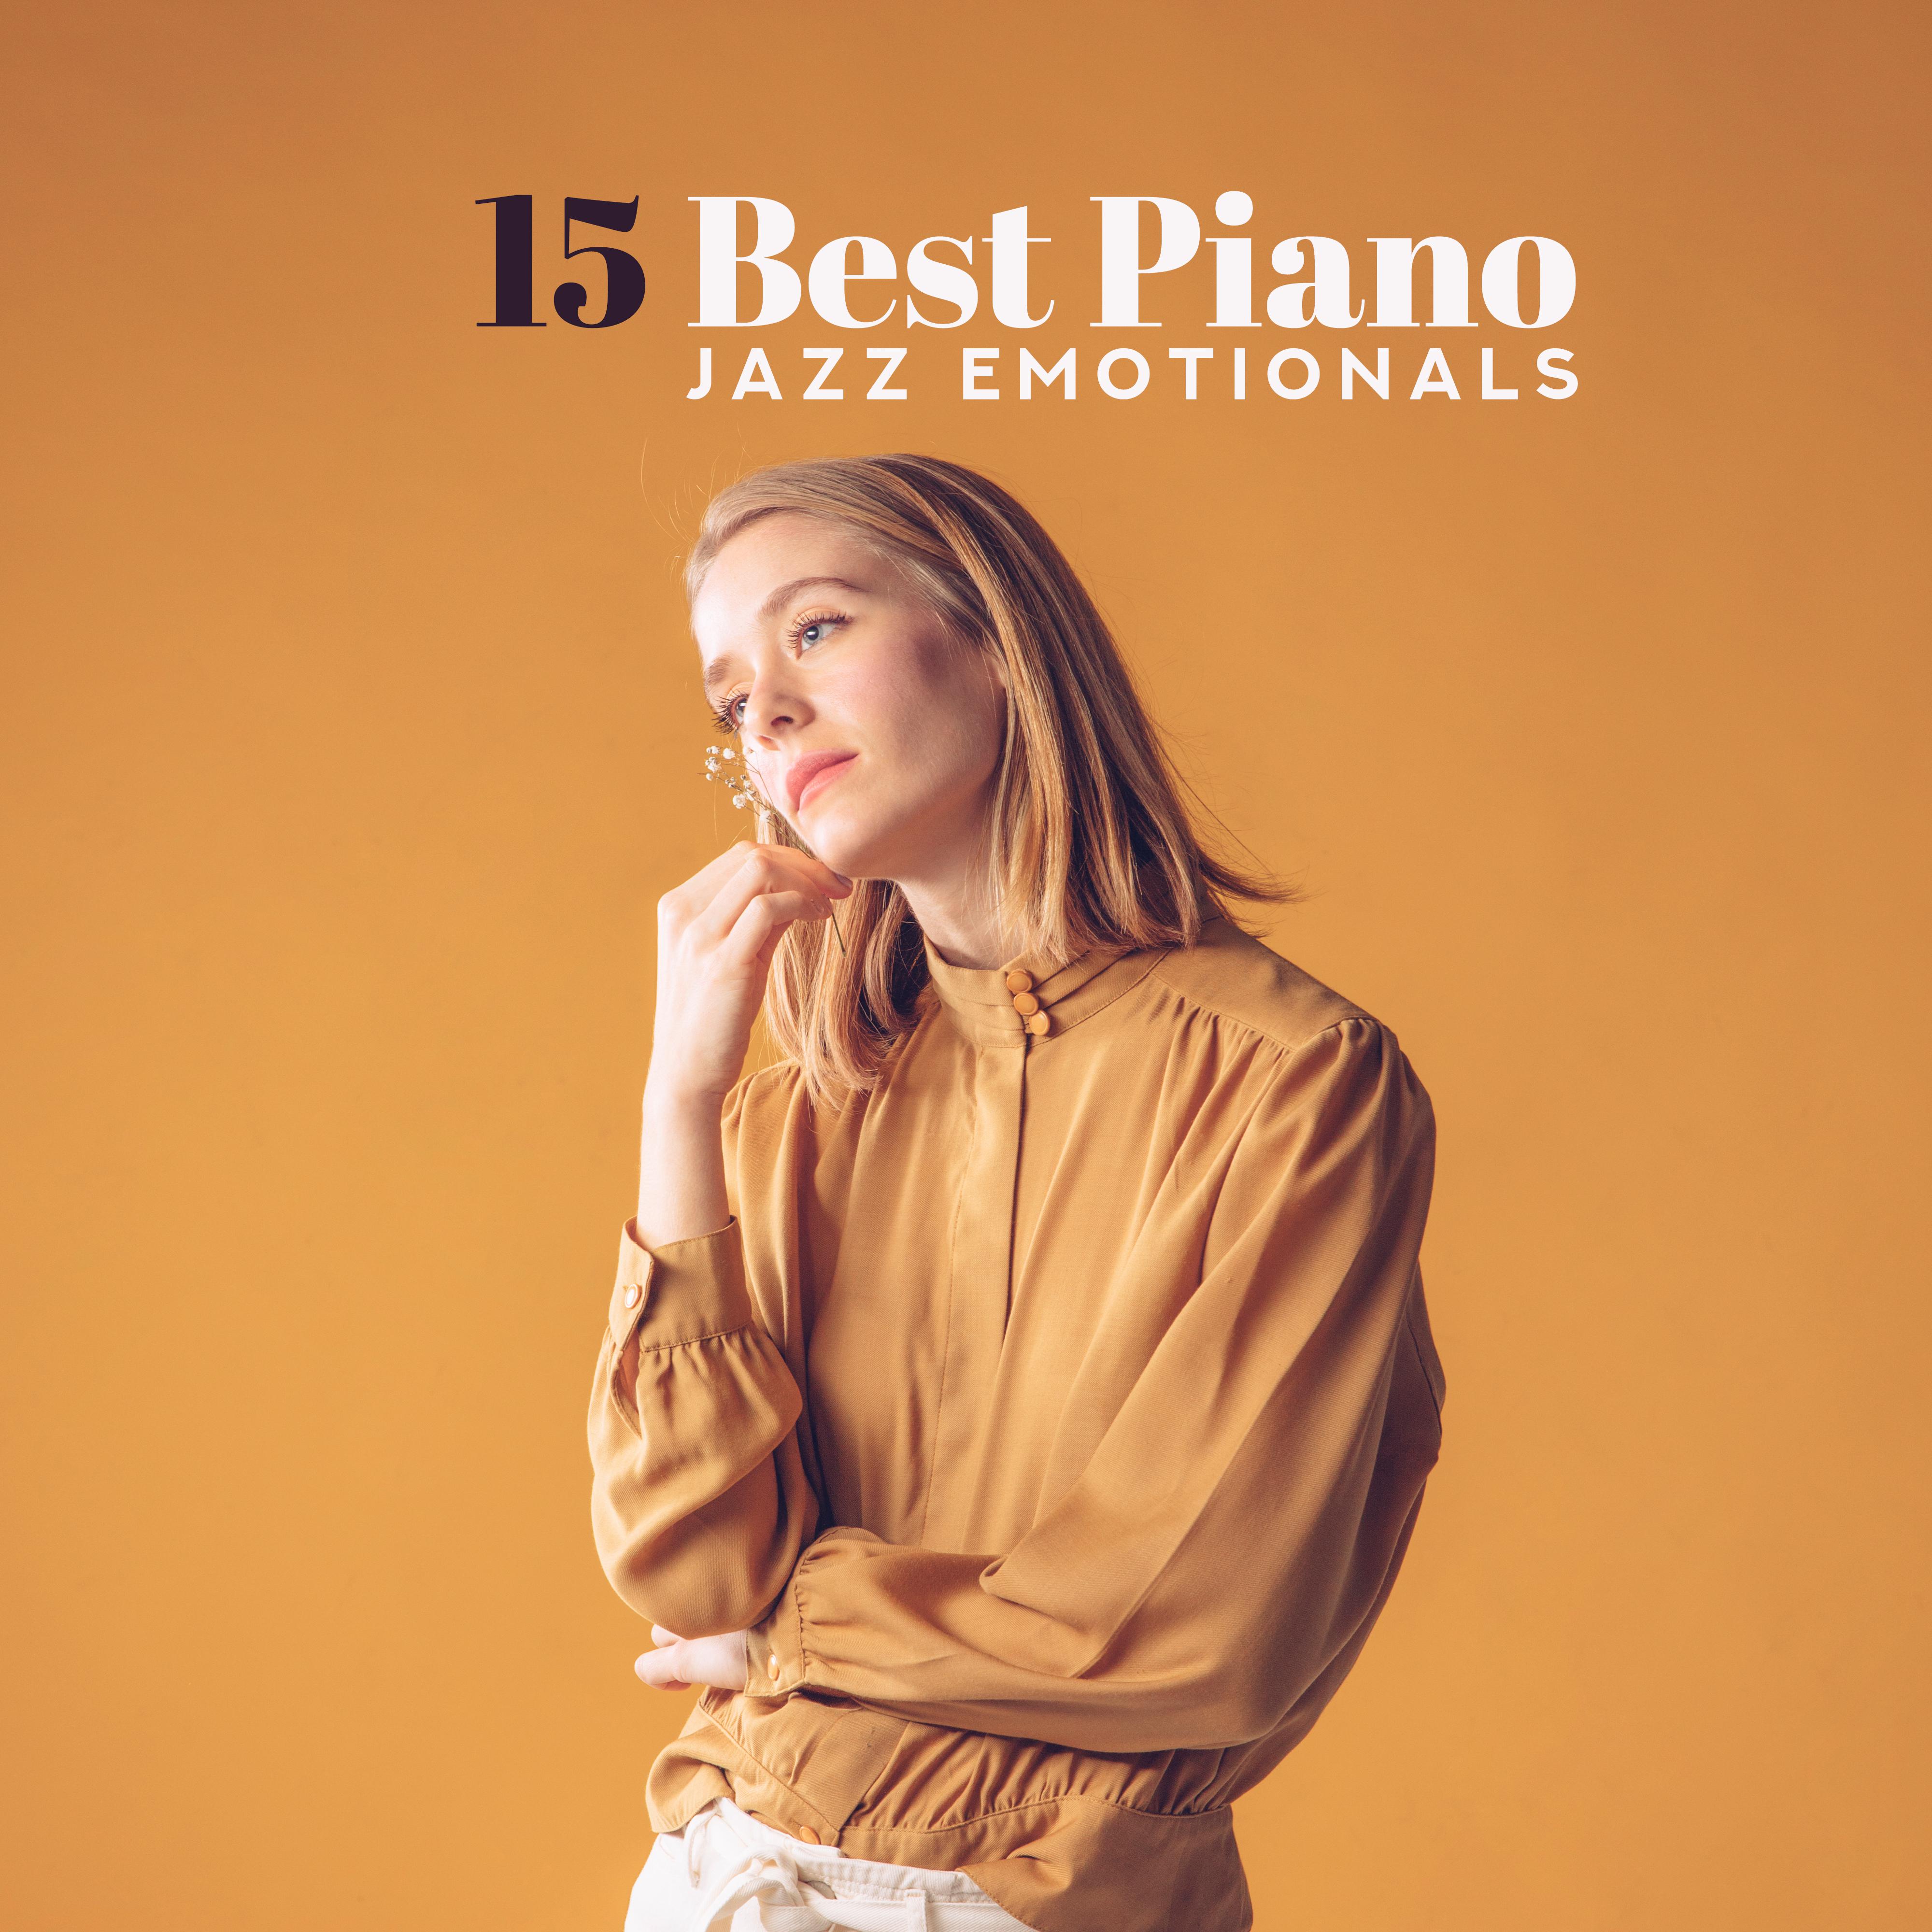 15 Best Piano Jazz Emotionals: 2019 Top Piano Jazz Sentimental Music Mix